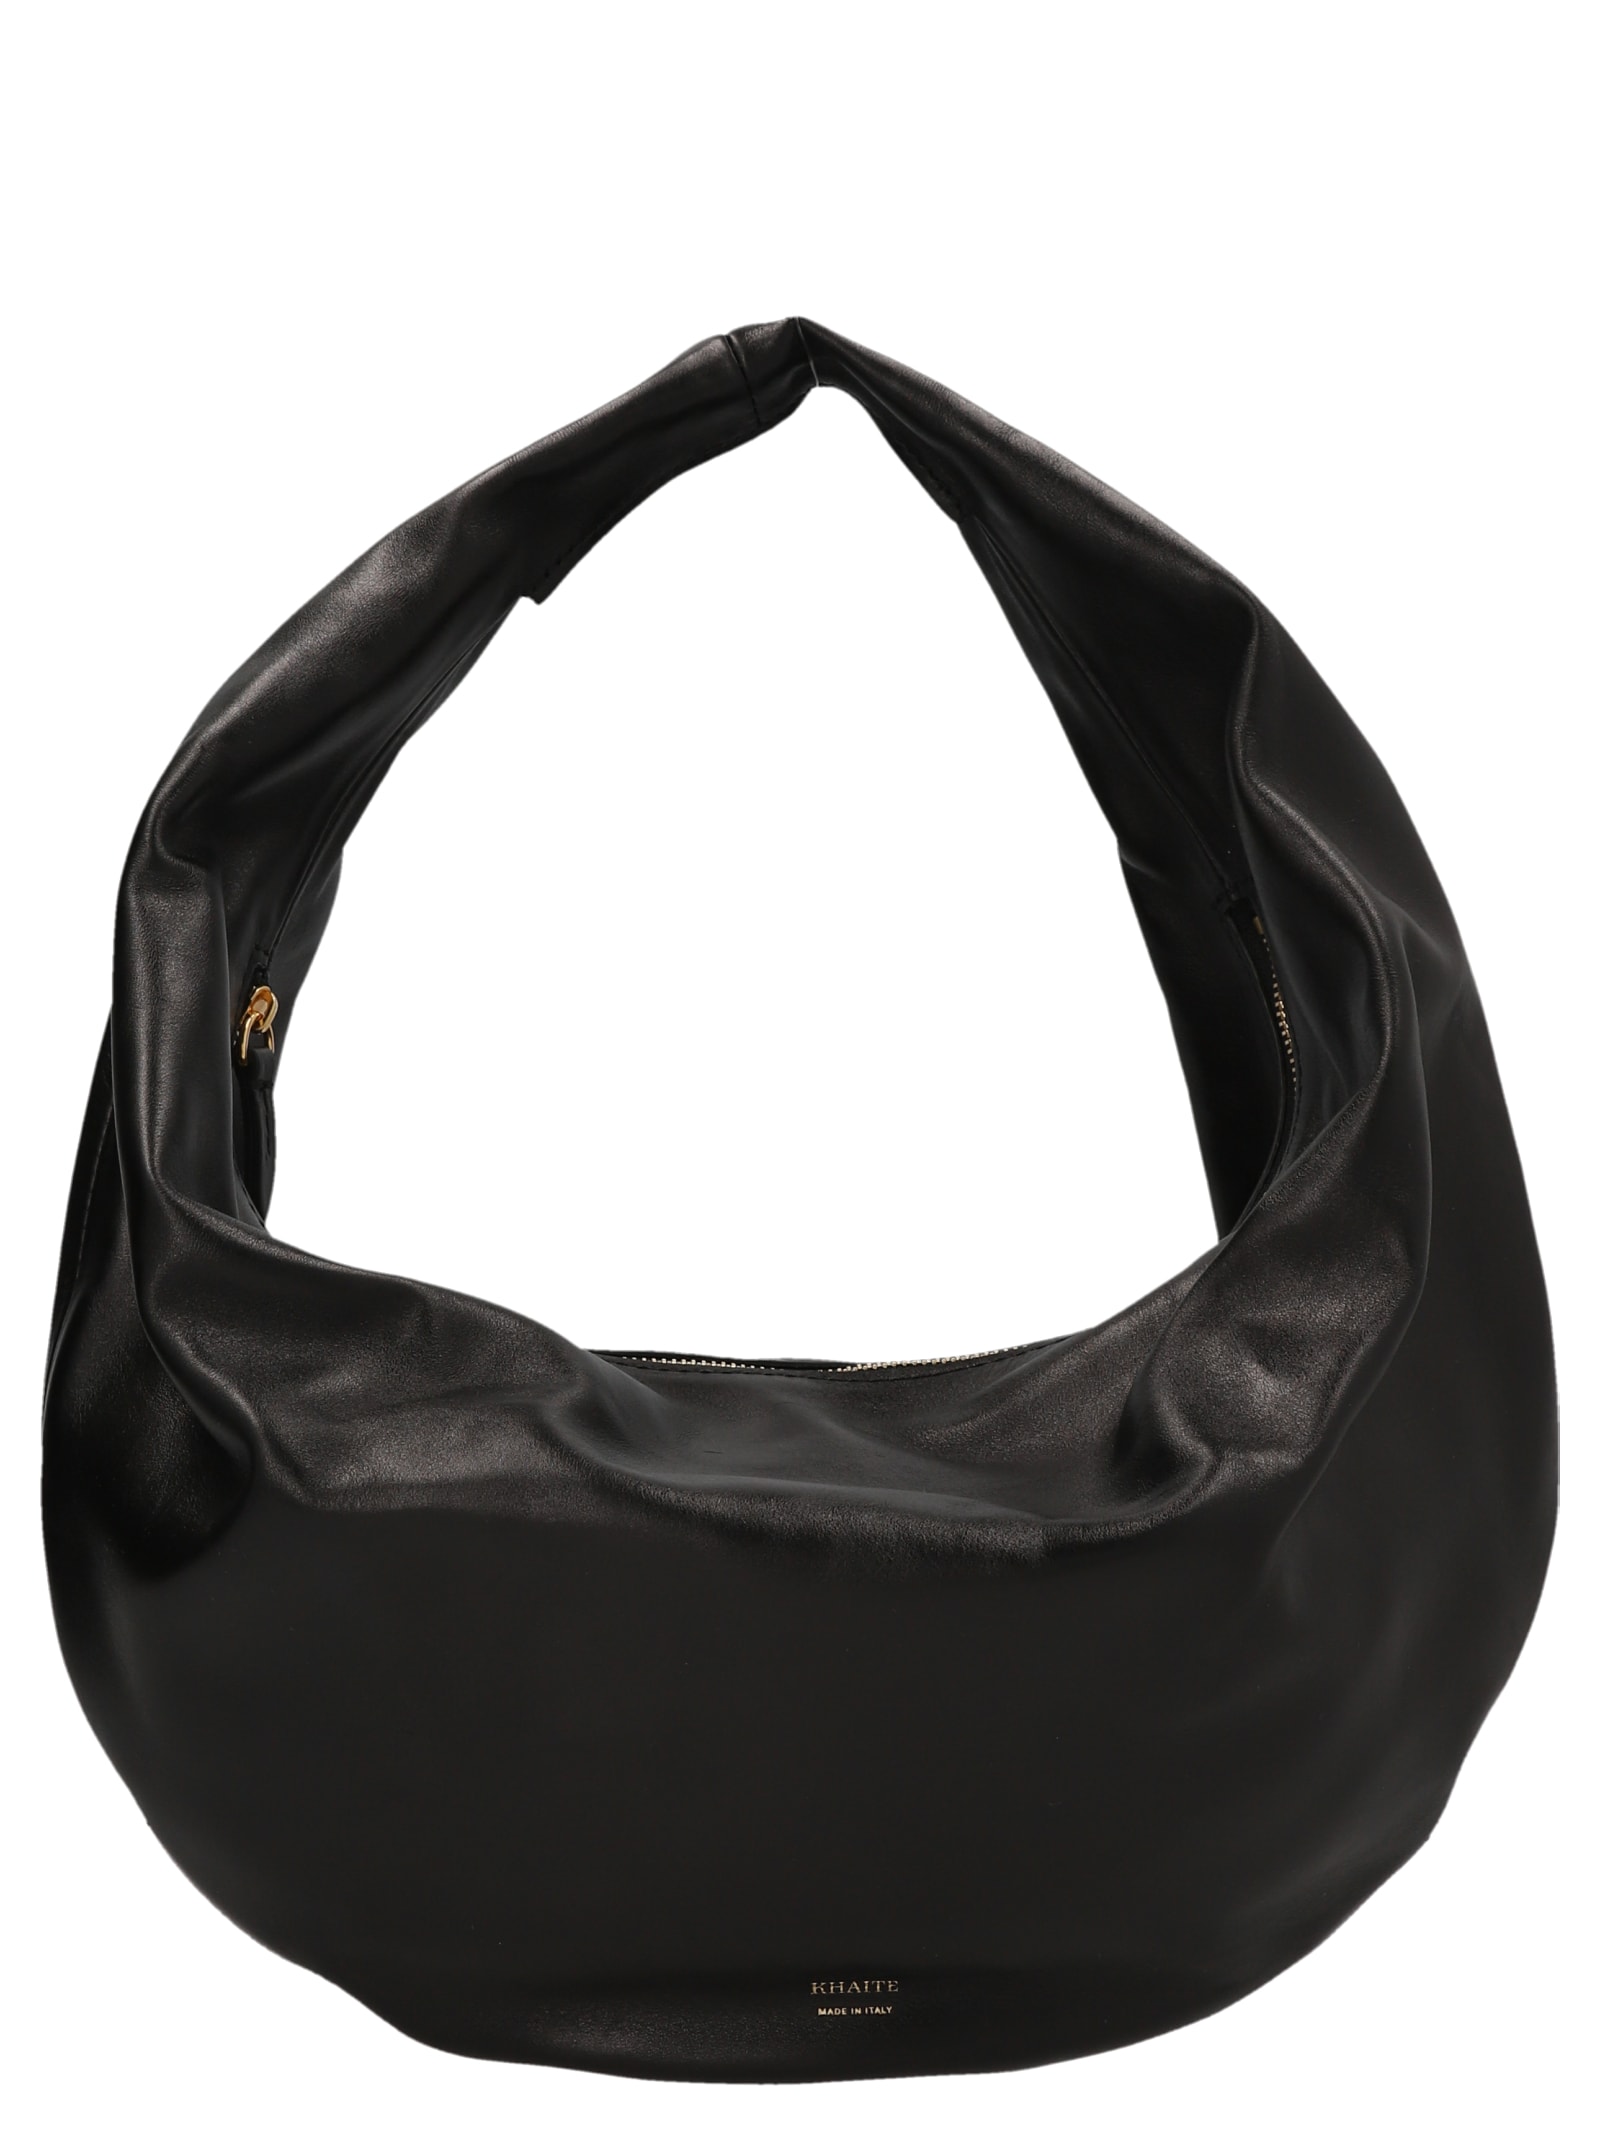 Khaite the Medium Olivia Hobo Shoulder Bag